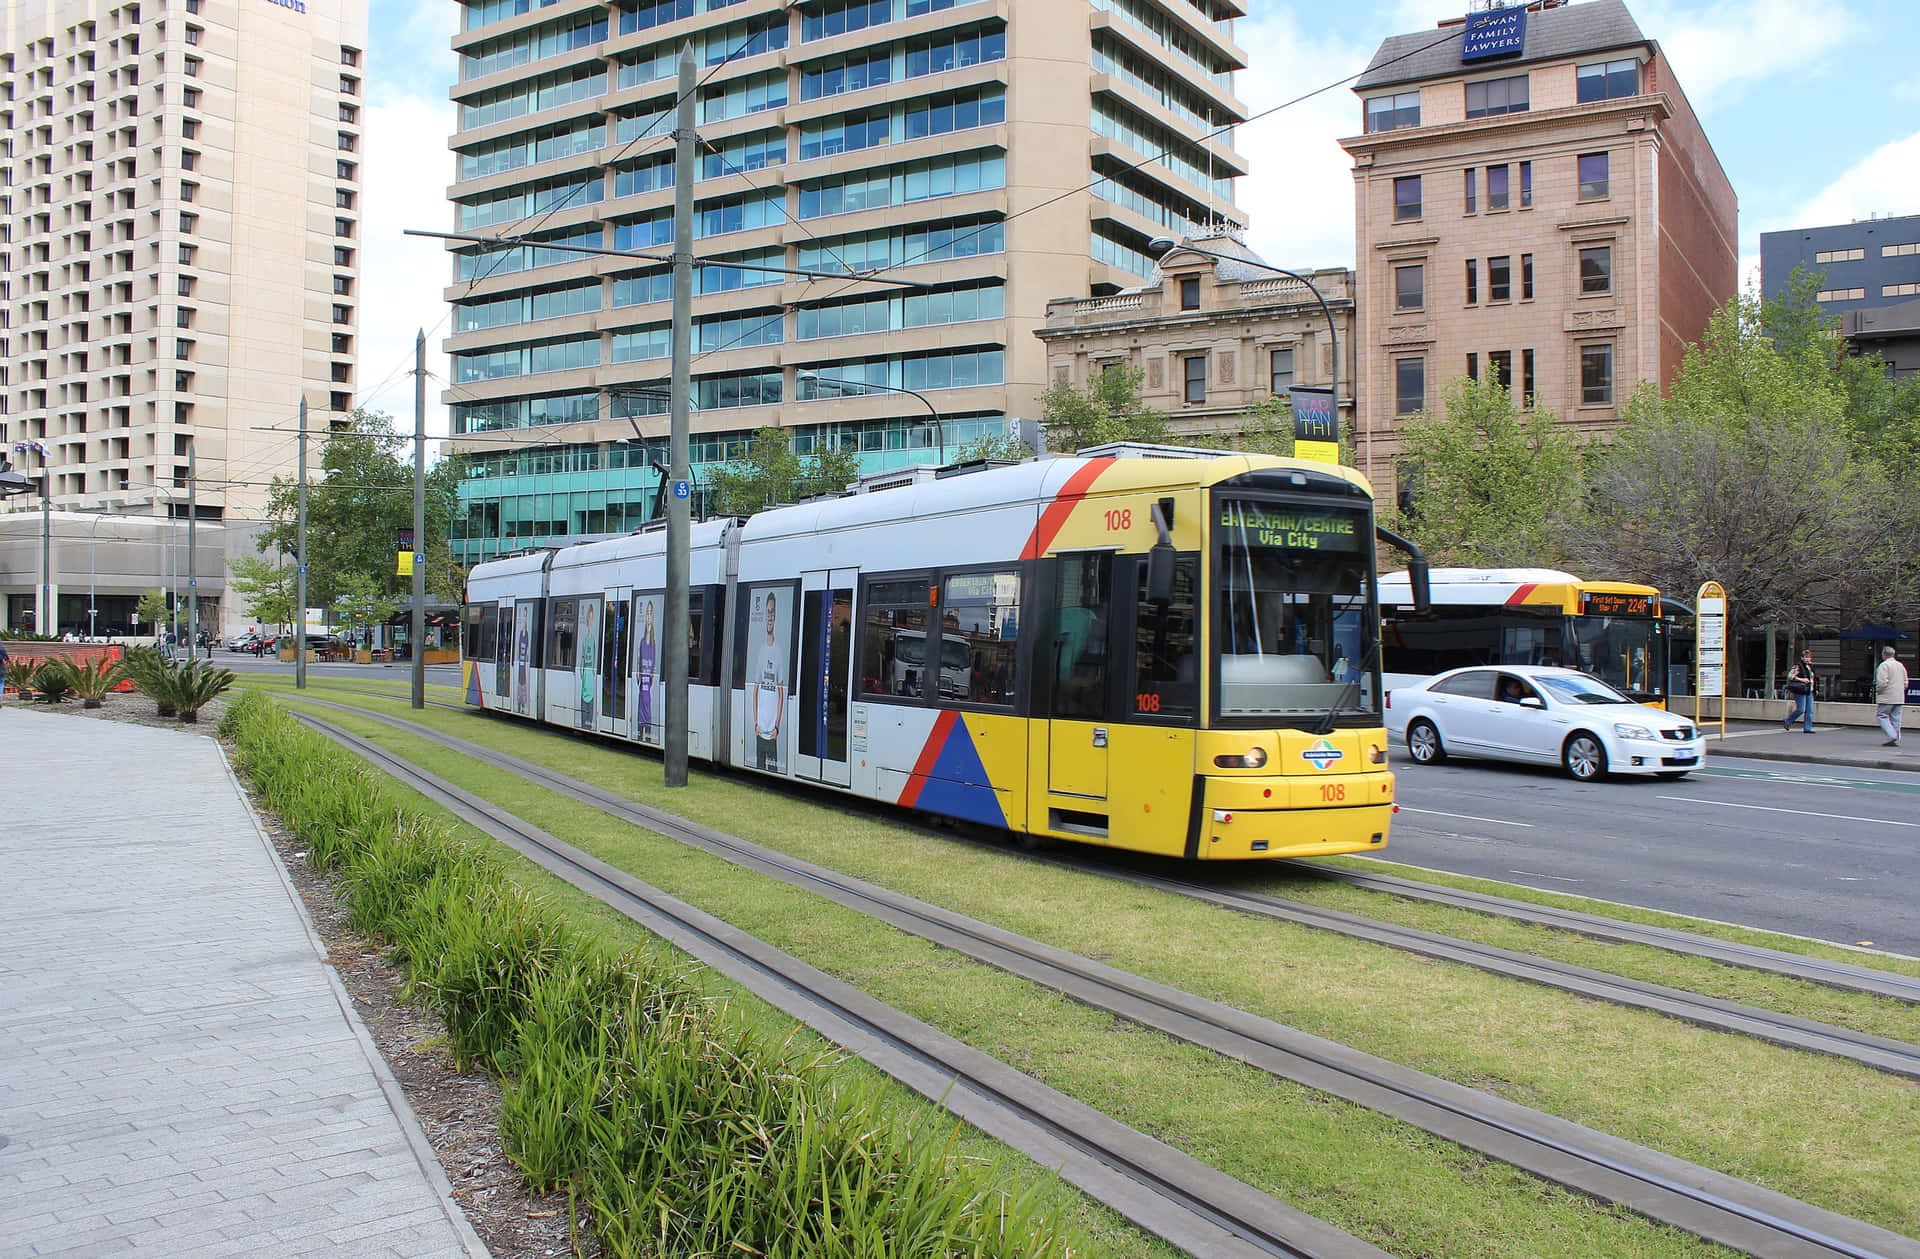 Adelaide Victoria Square Tram Wallpaper